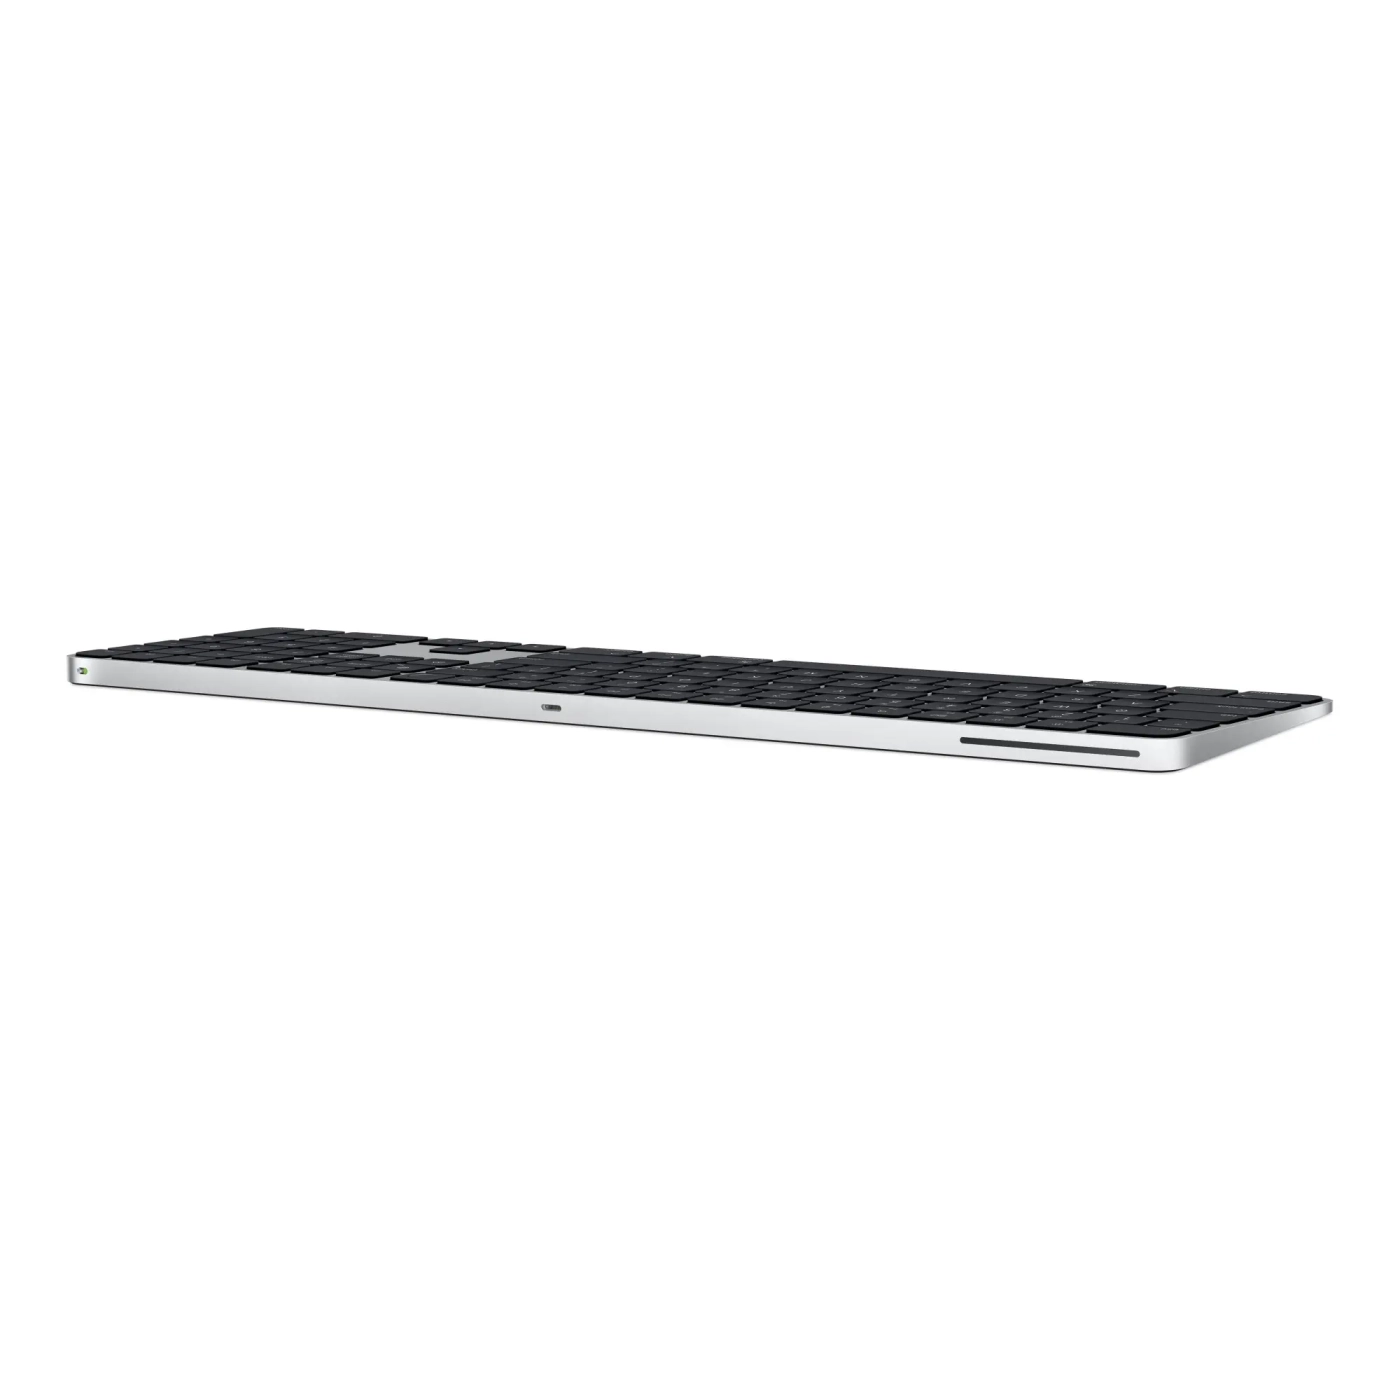 Купить Клавиатура Apple Magic Keyboard с Touch ID и цифровой панелью Black - фото 4